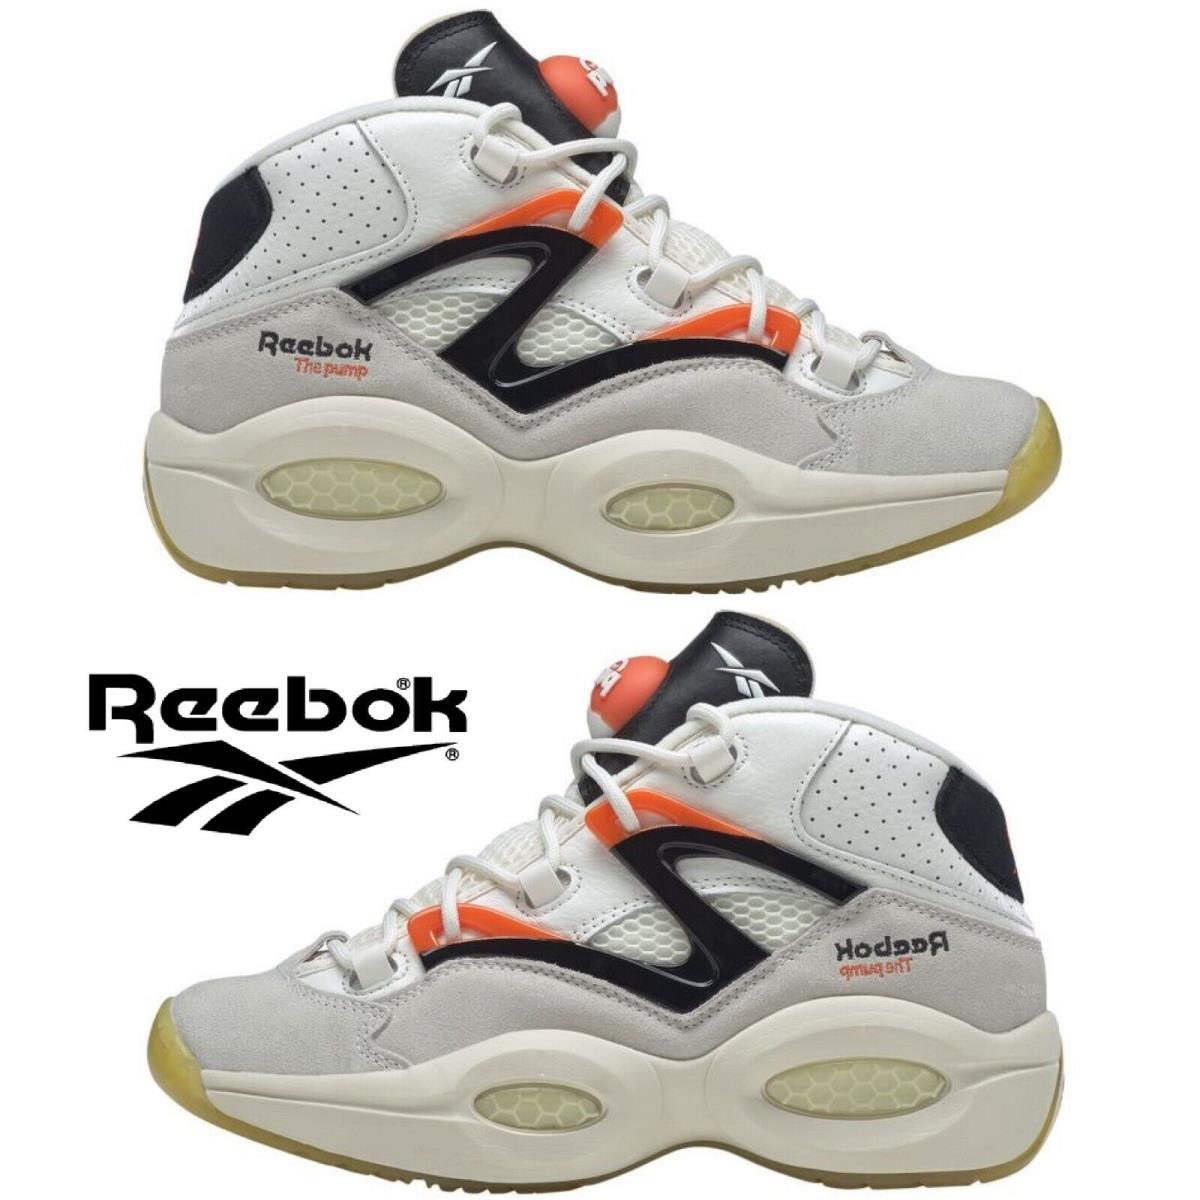 Reebok Question Pump Basketball Shoes Men`s Sneakers Running Casual Sport